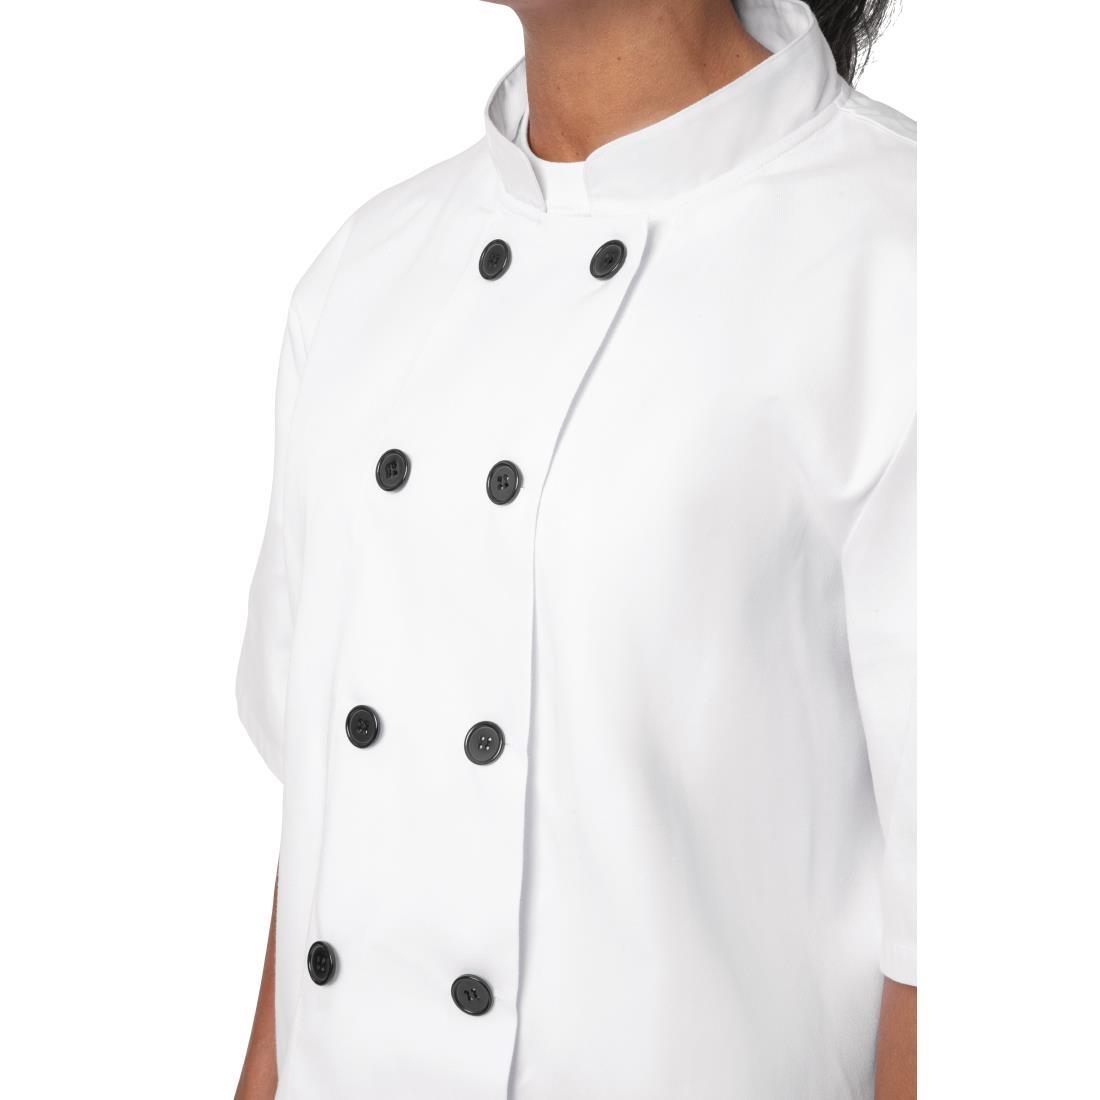 Nisbets Essentials Short Sleeve Chefs Jacket White M (Pack of 2) - BB547-M  - 3